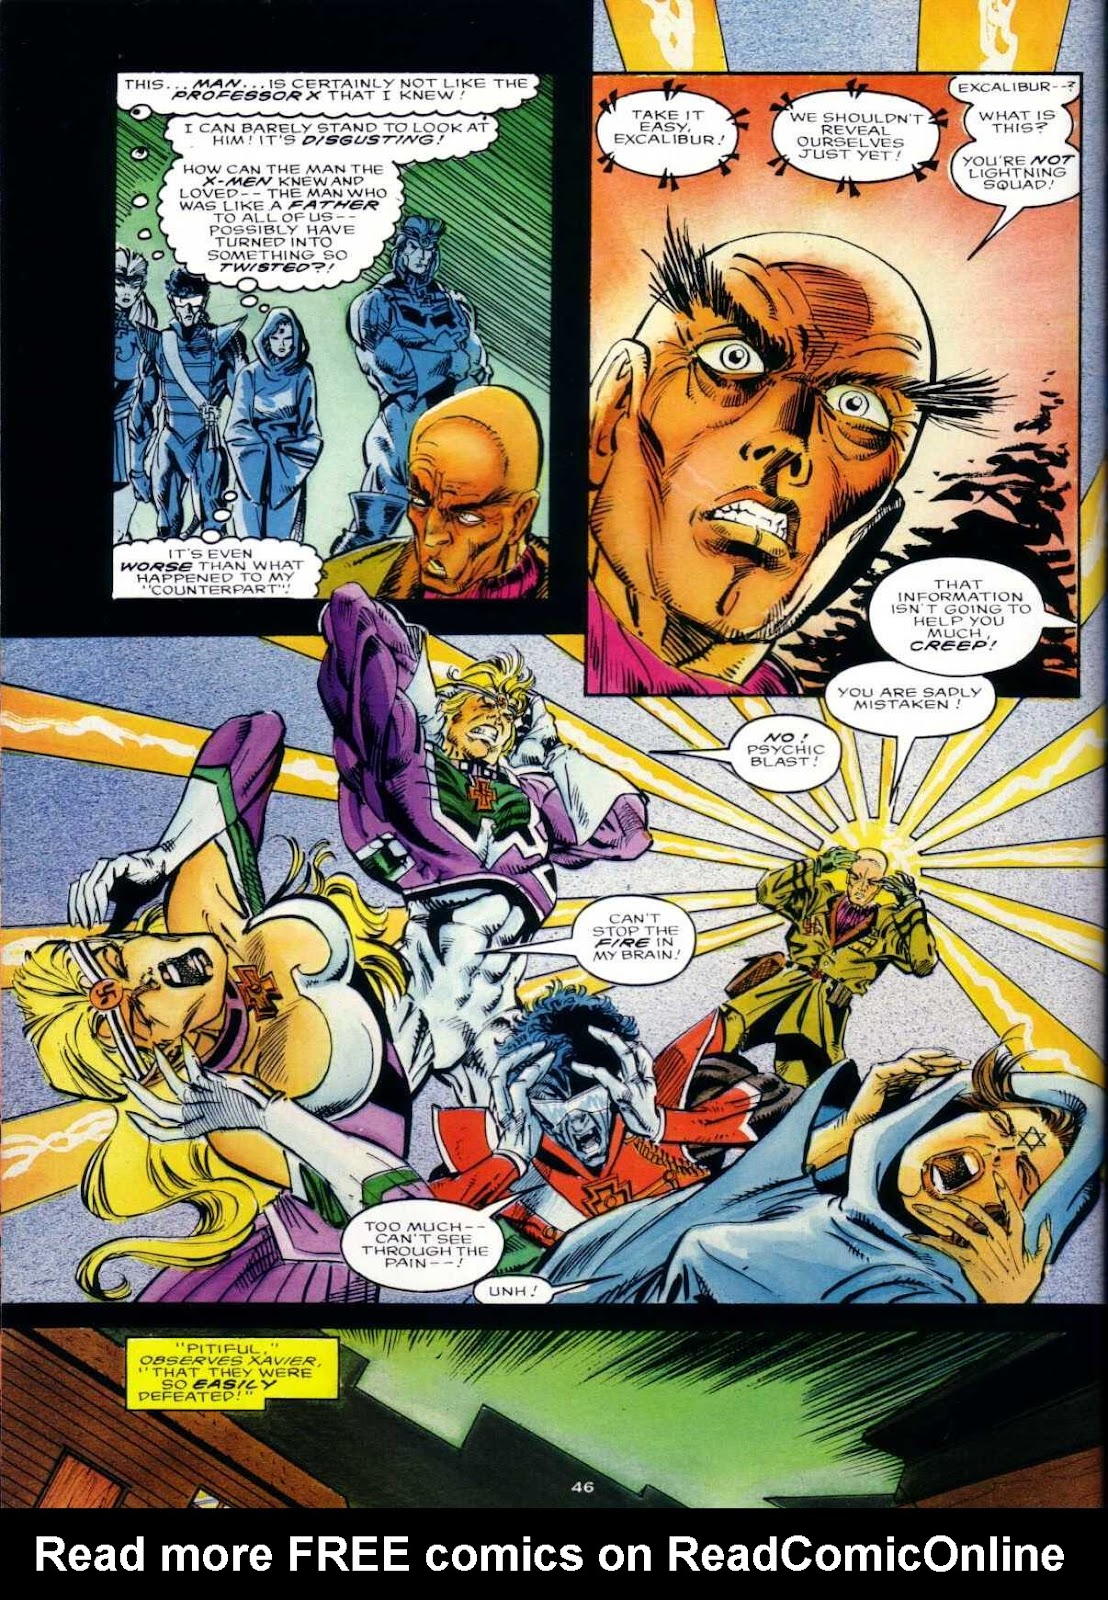 Marvel Graphic Novel issue 66 - Excalibur - Weird War III - Page 45